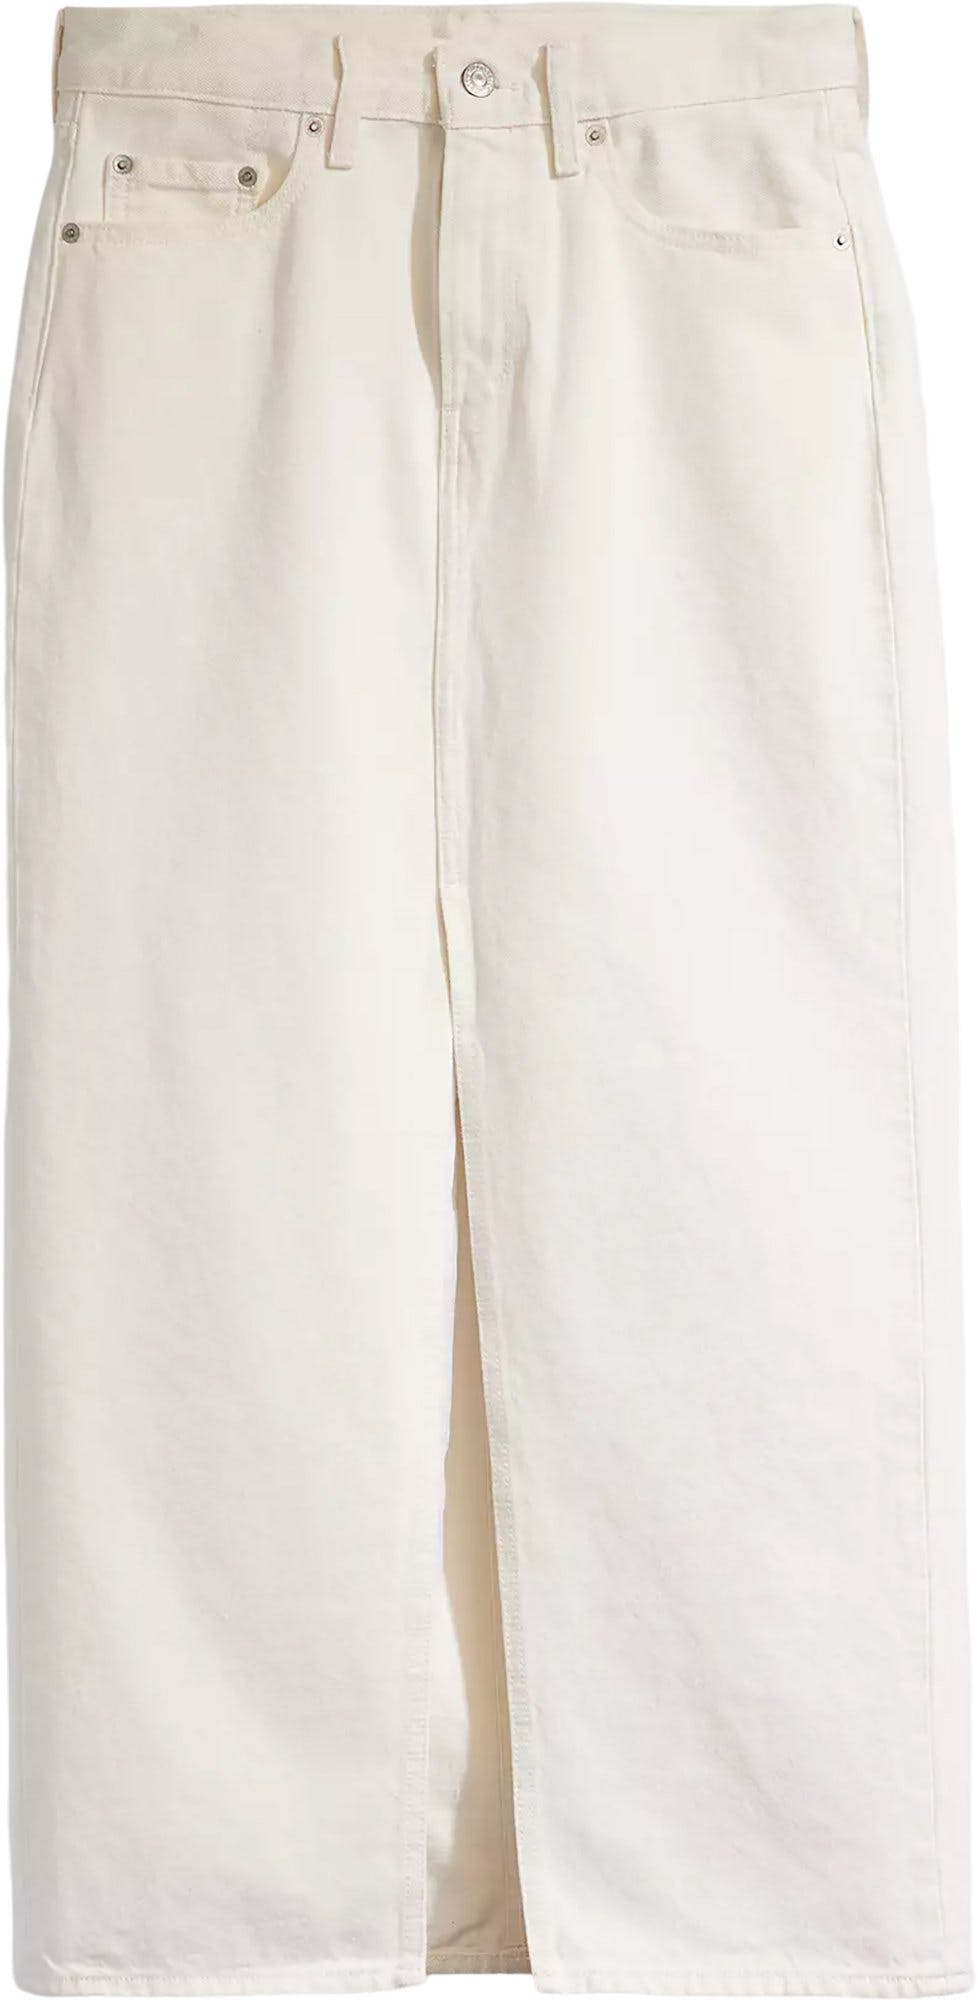 Product image for Ankle Column Skirt - Women's